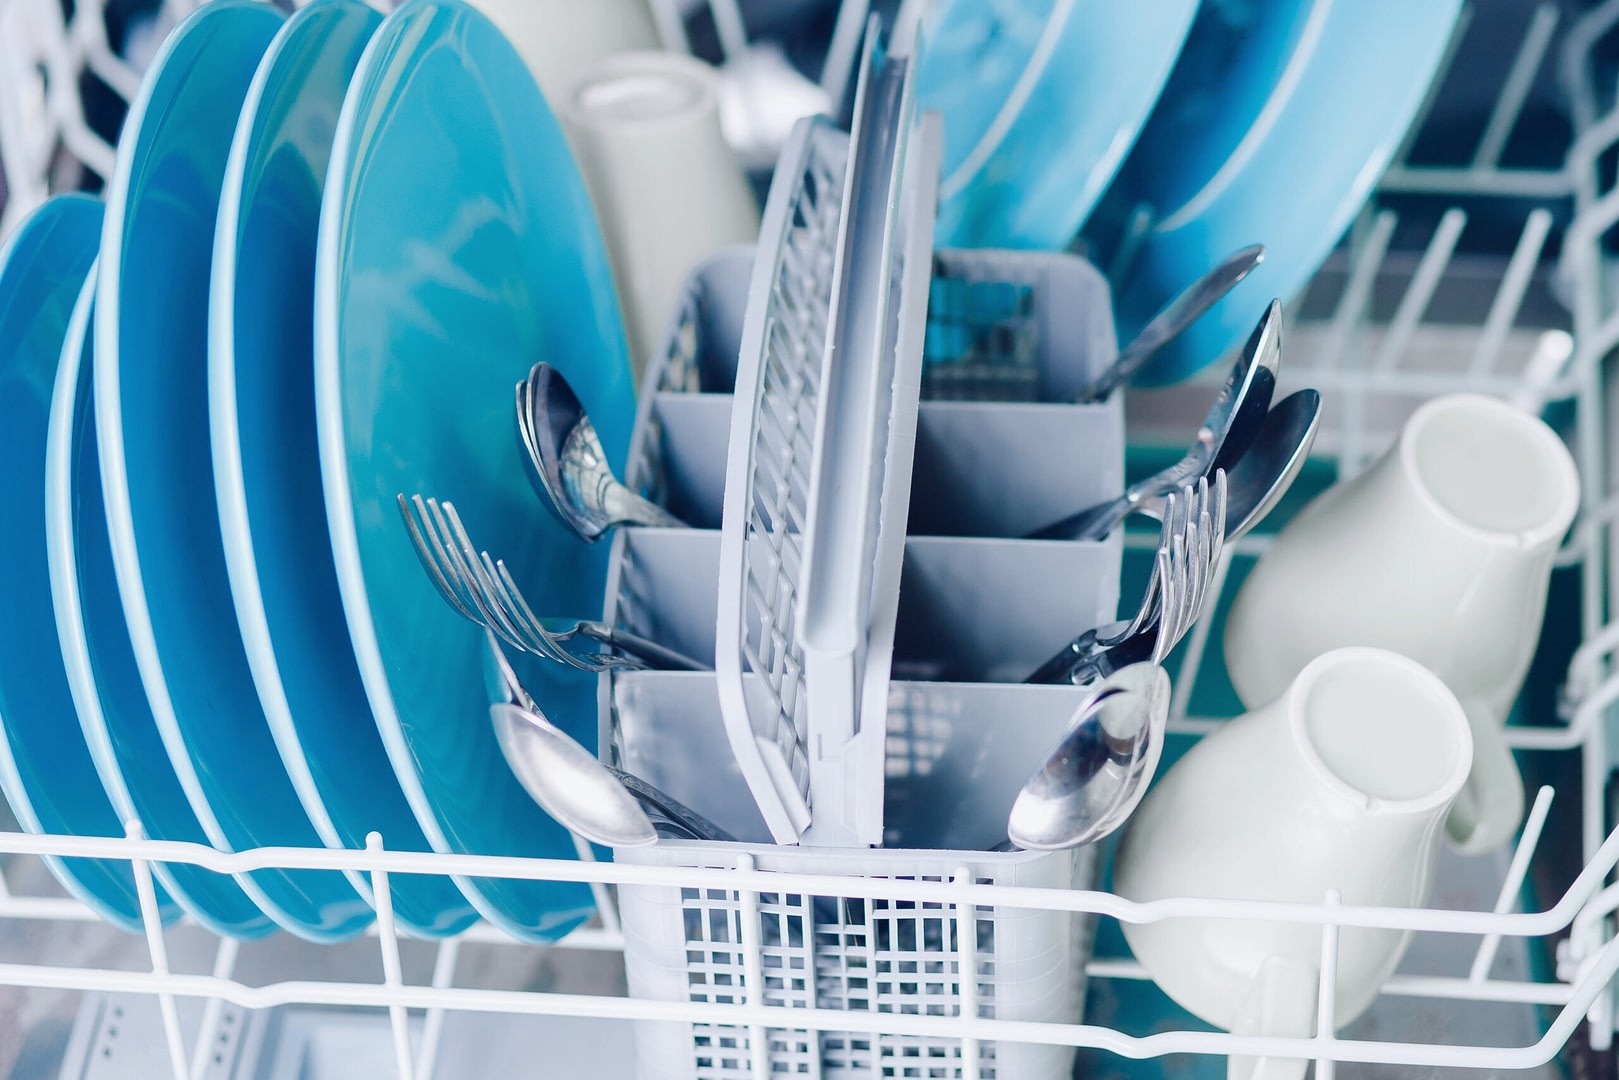 Shiny dishes in dishwasher